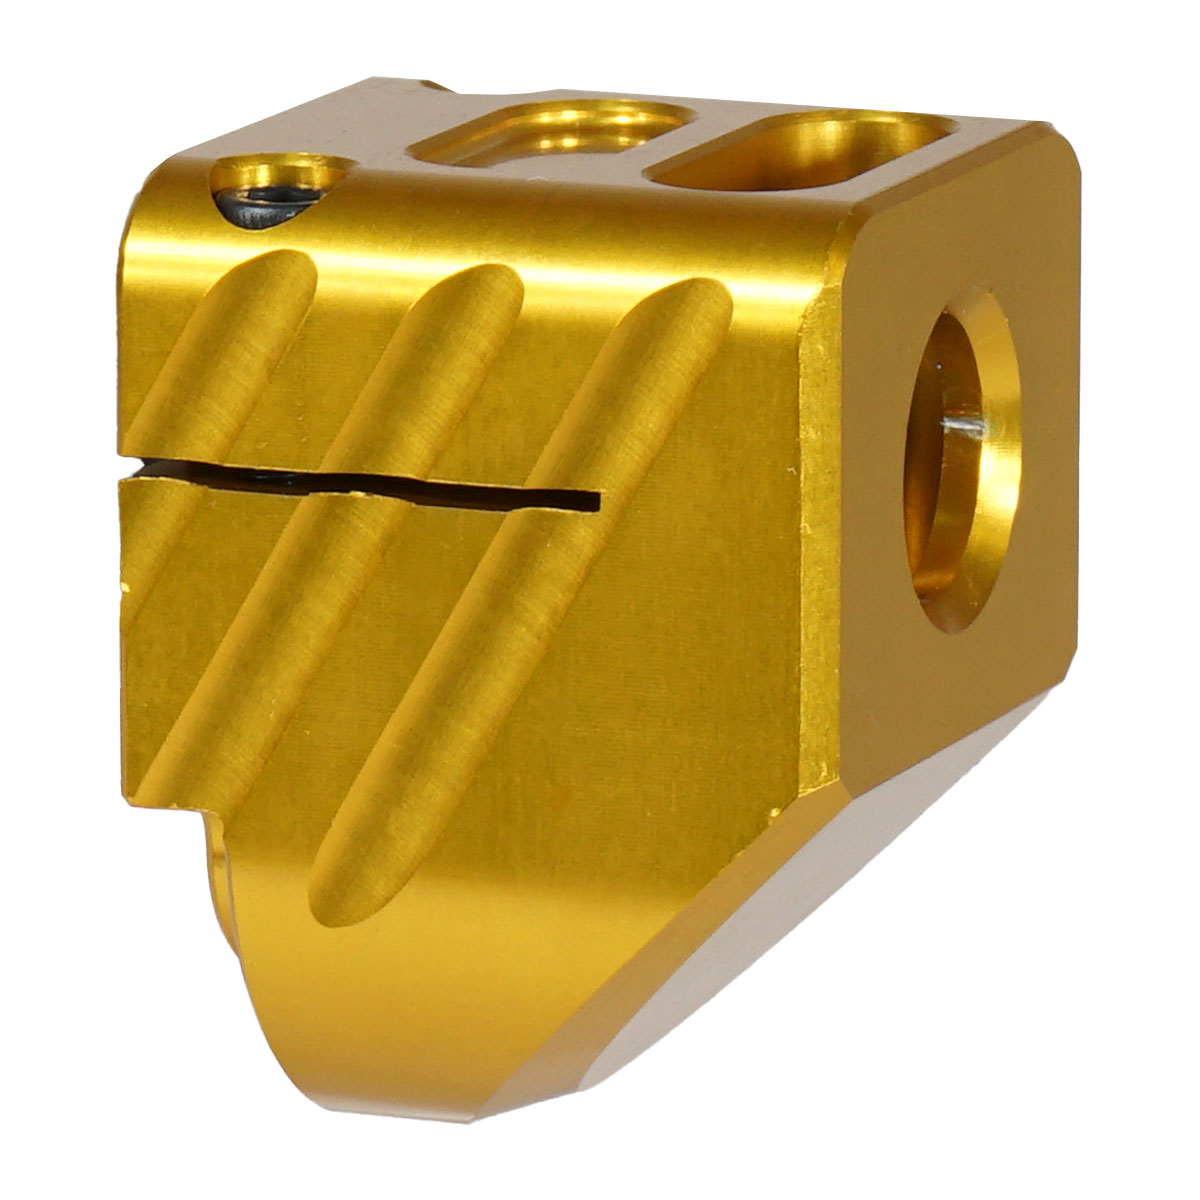 Mercury Precision Glock Compatible Compensator 6061 Aluminum, Anodized Type 2 Gold Single port comp 1/2x28 with clamping set screws